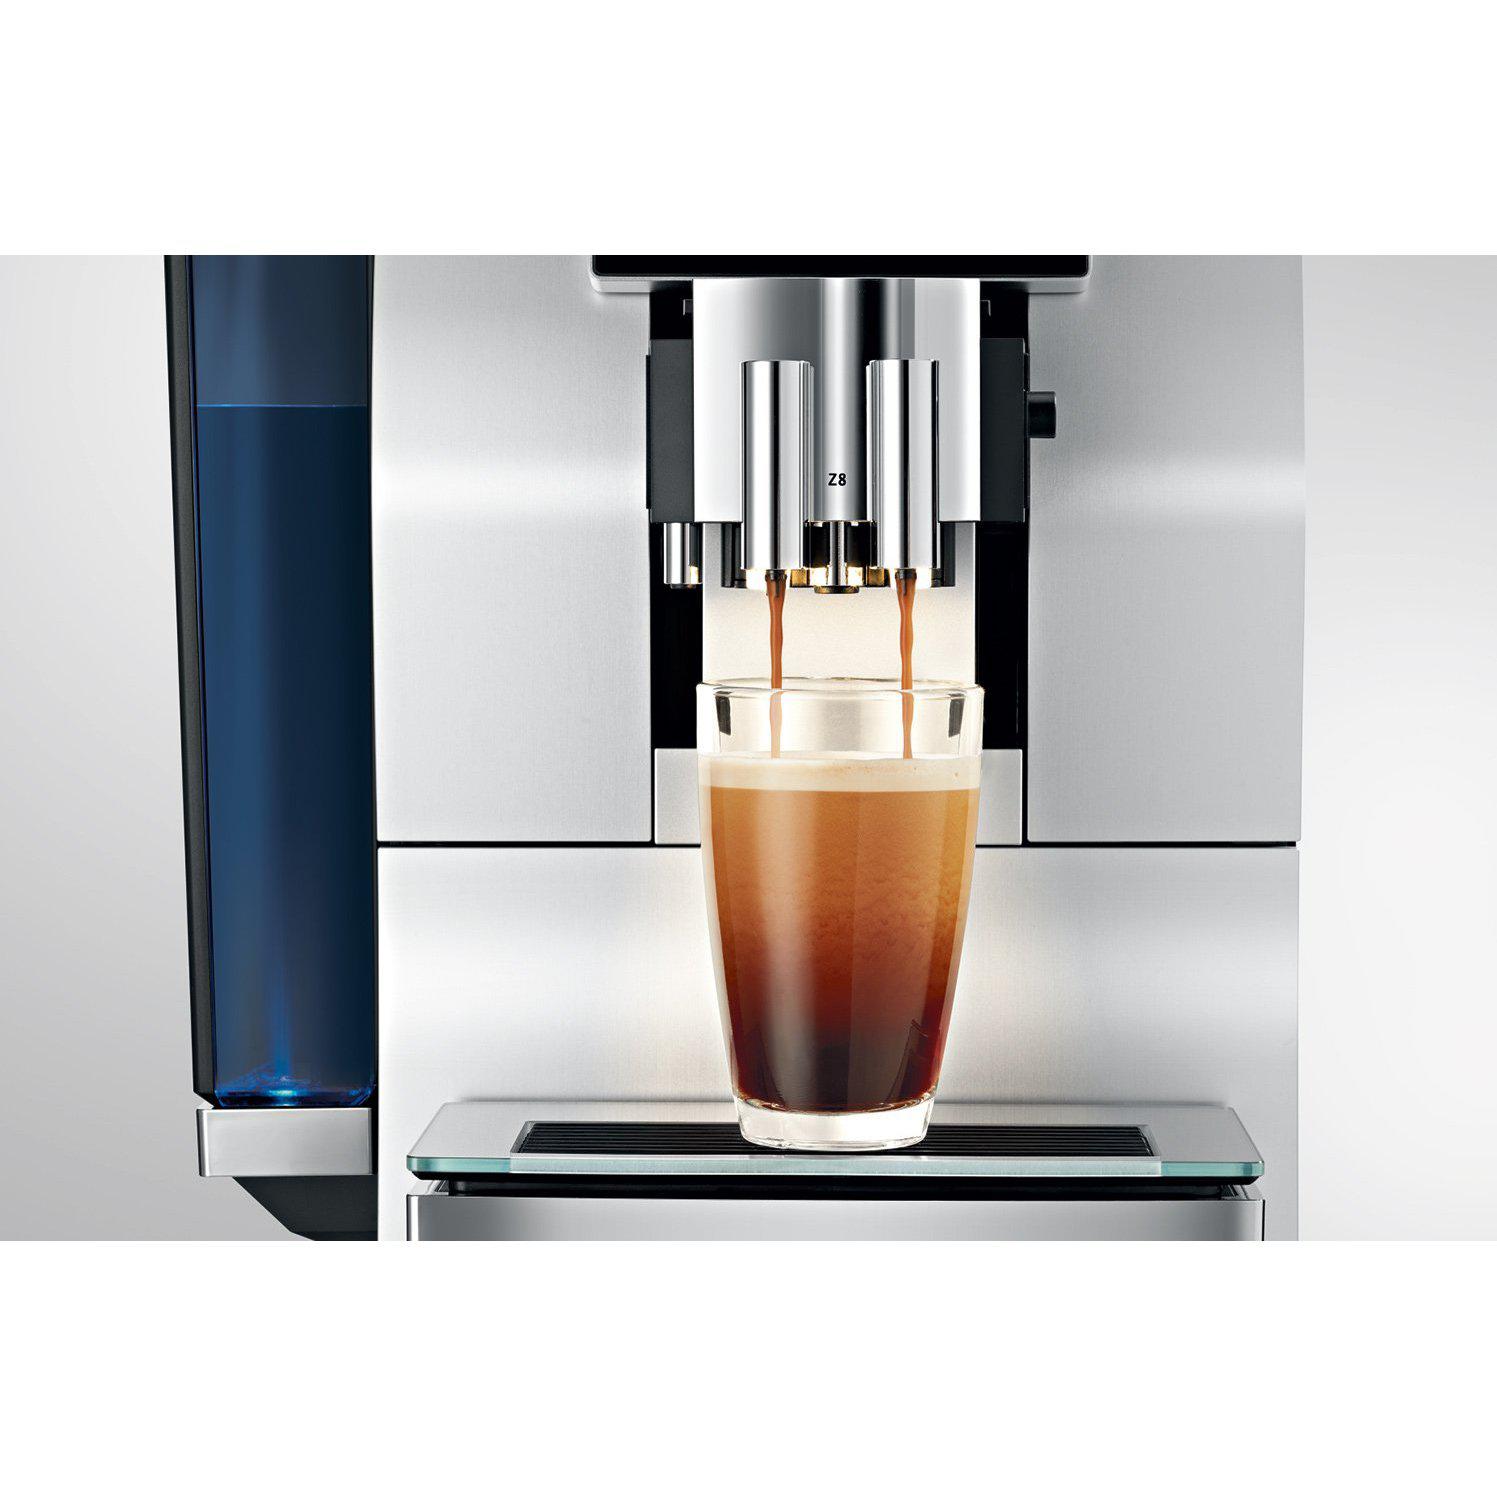 Jura Z8 Espresso Machine Making Americano Coffee